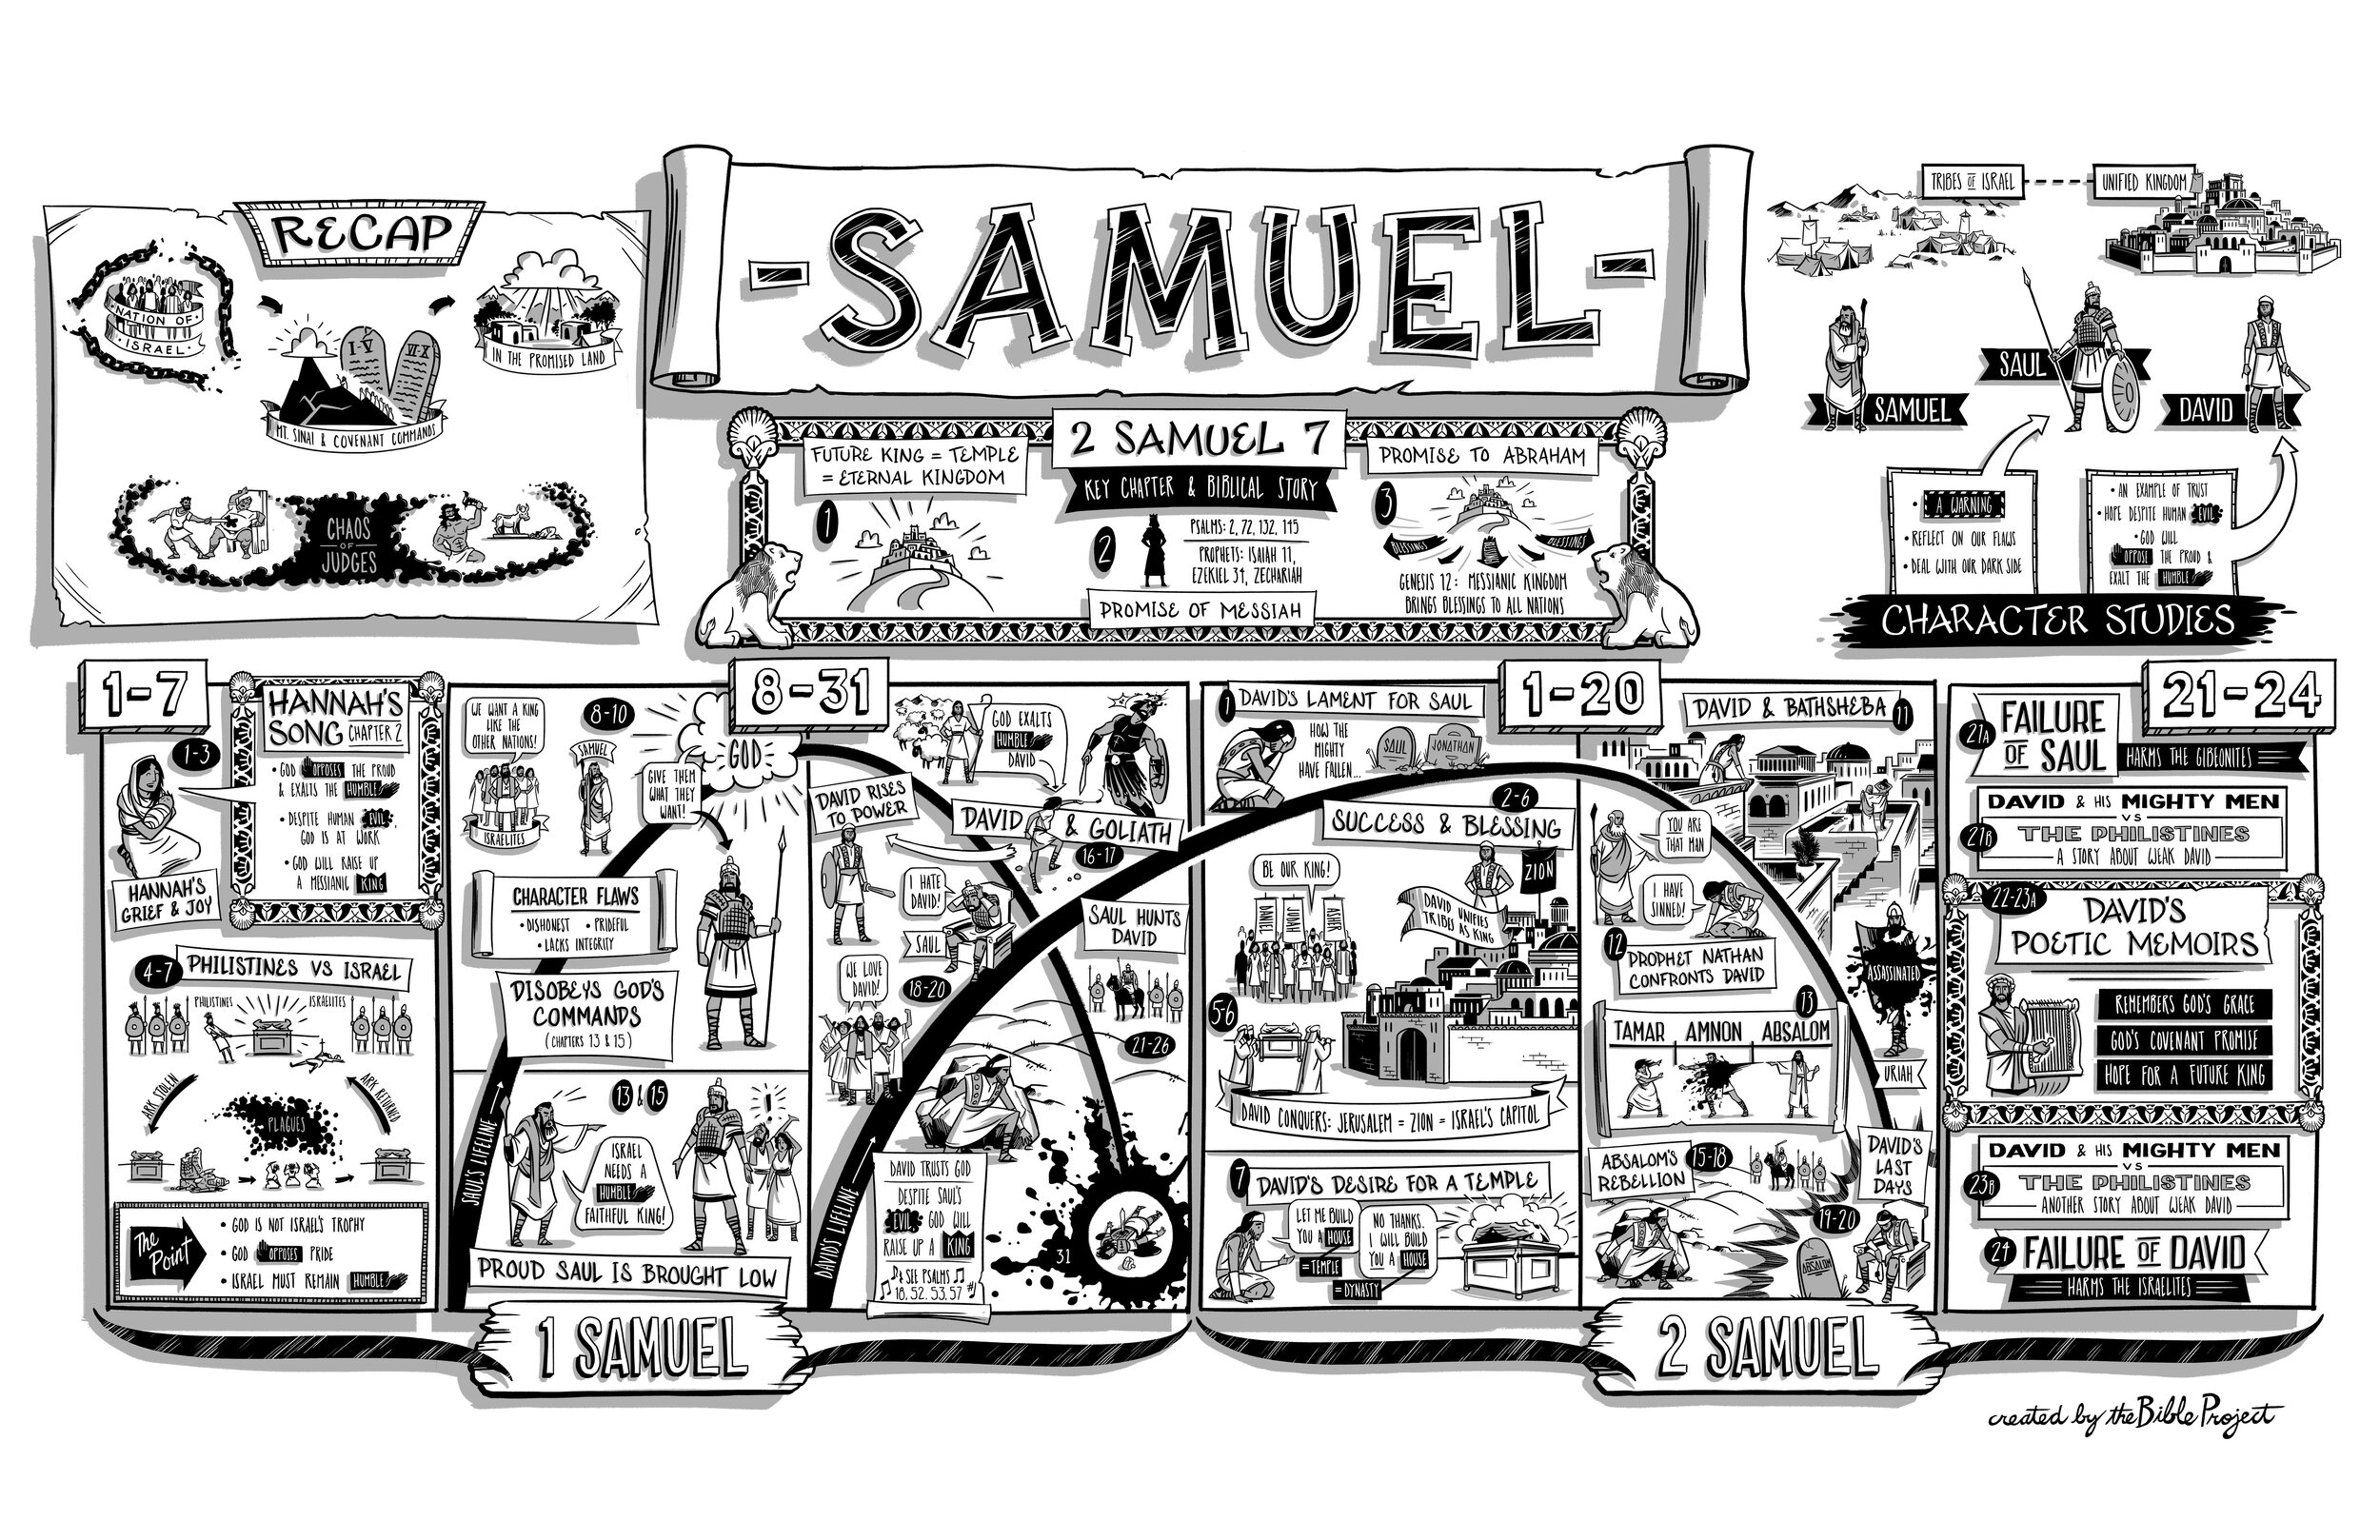 BibleProject: 2 Samuel (Video)